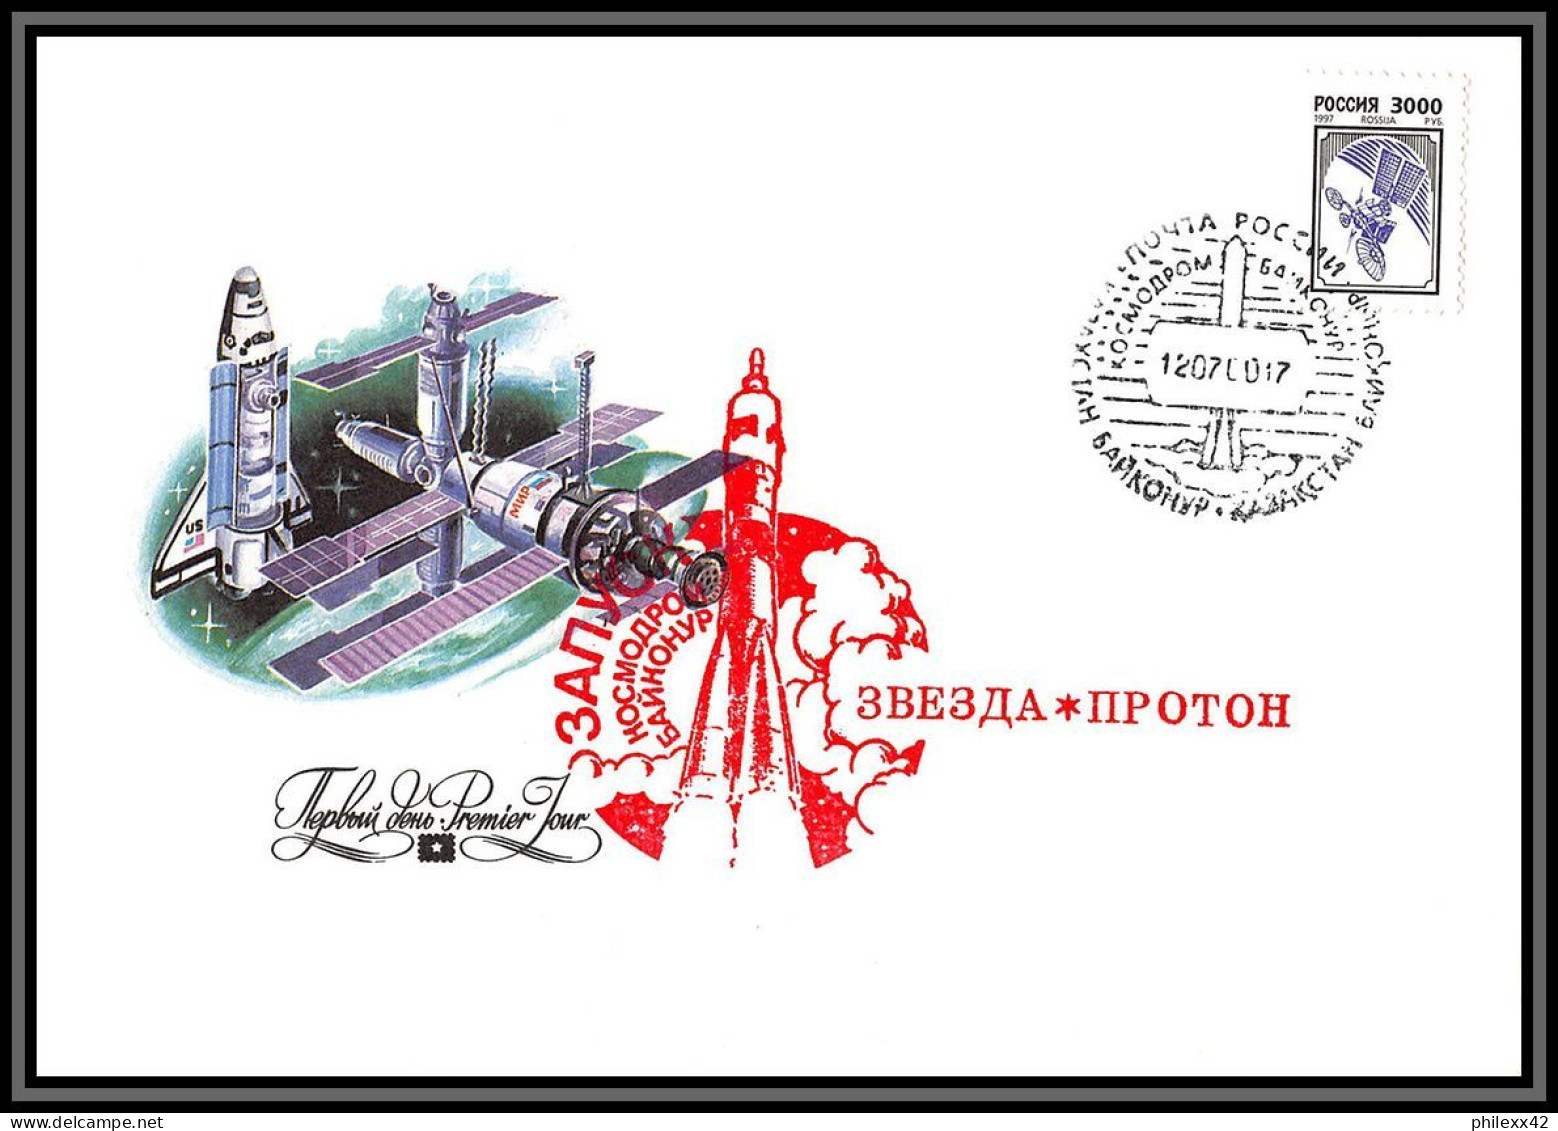 2569 Espace (space Raumfahrt) Russie (Russia) Russia 12/7/2000 Iss 01 Baikonur - Azië